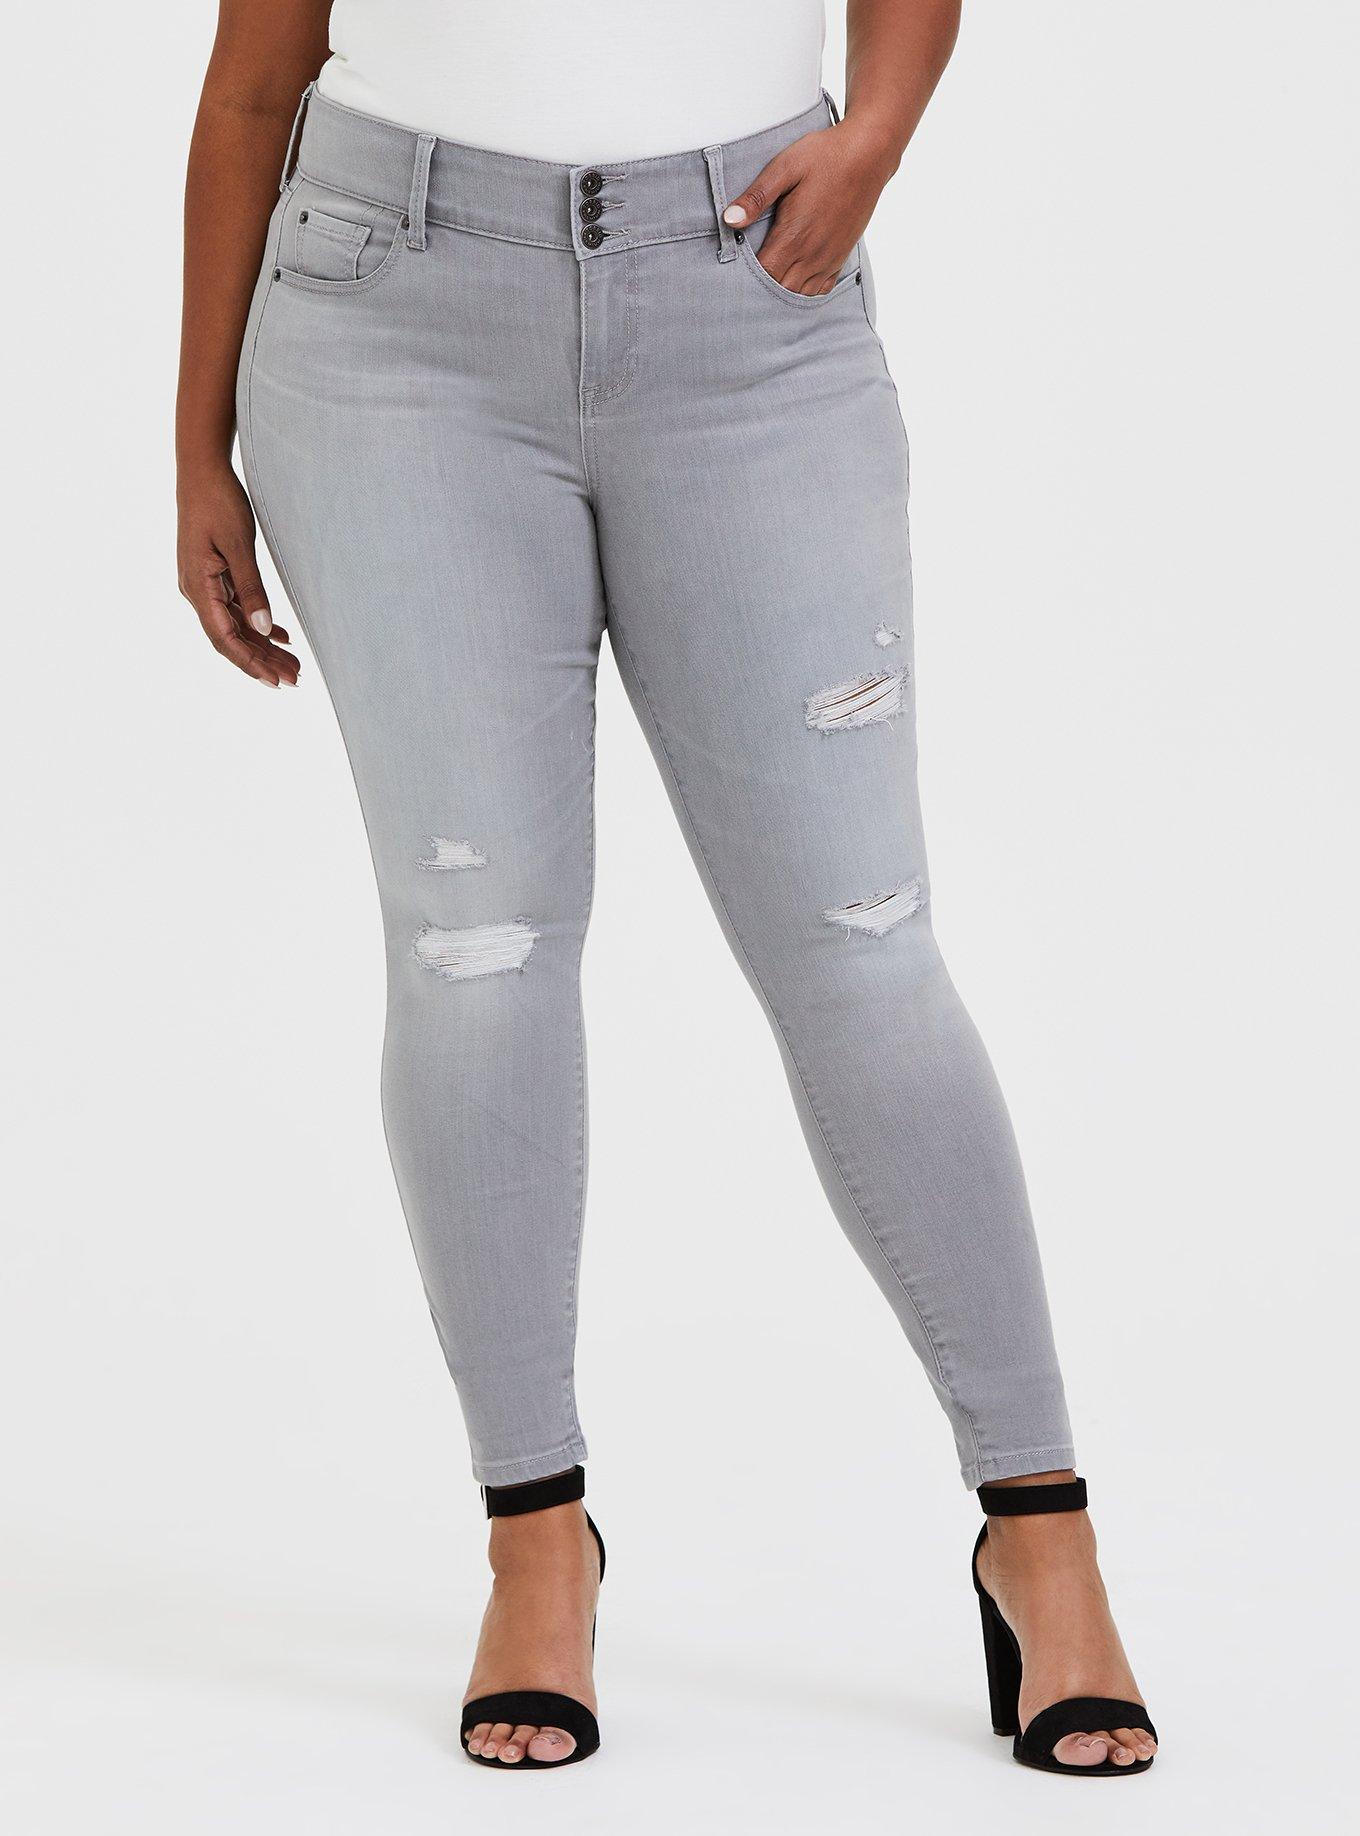 Gray/Grey Jegging Women's Jeans